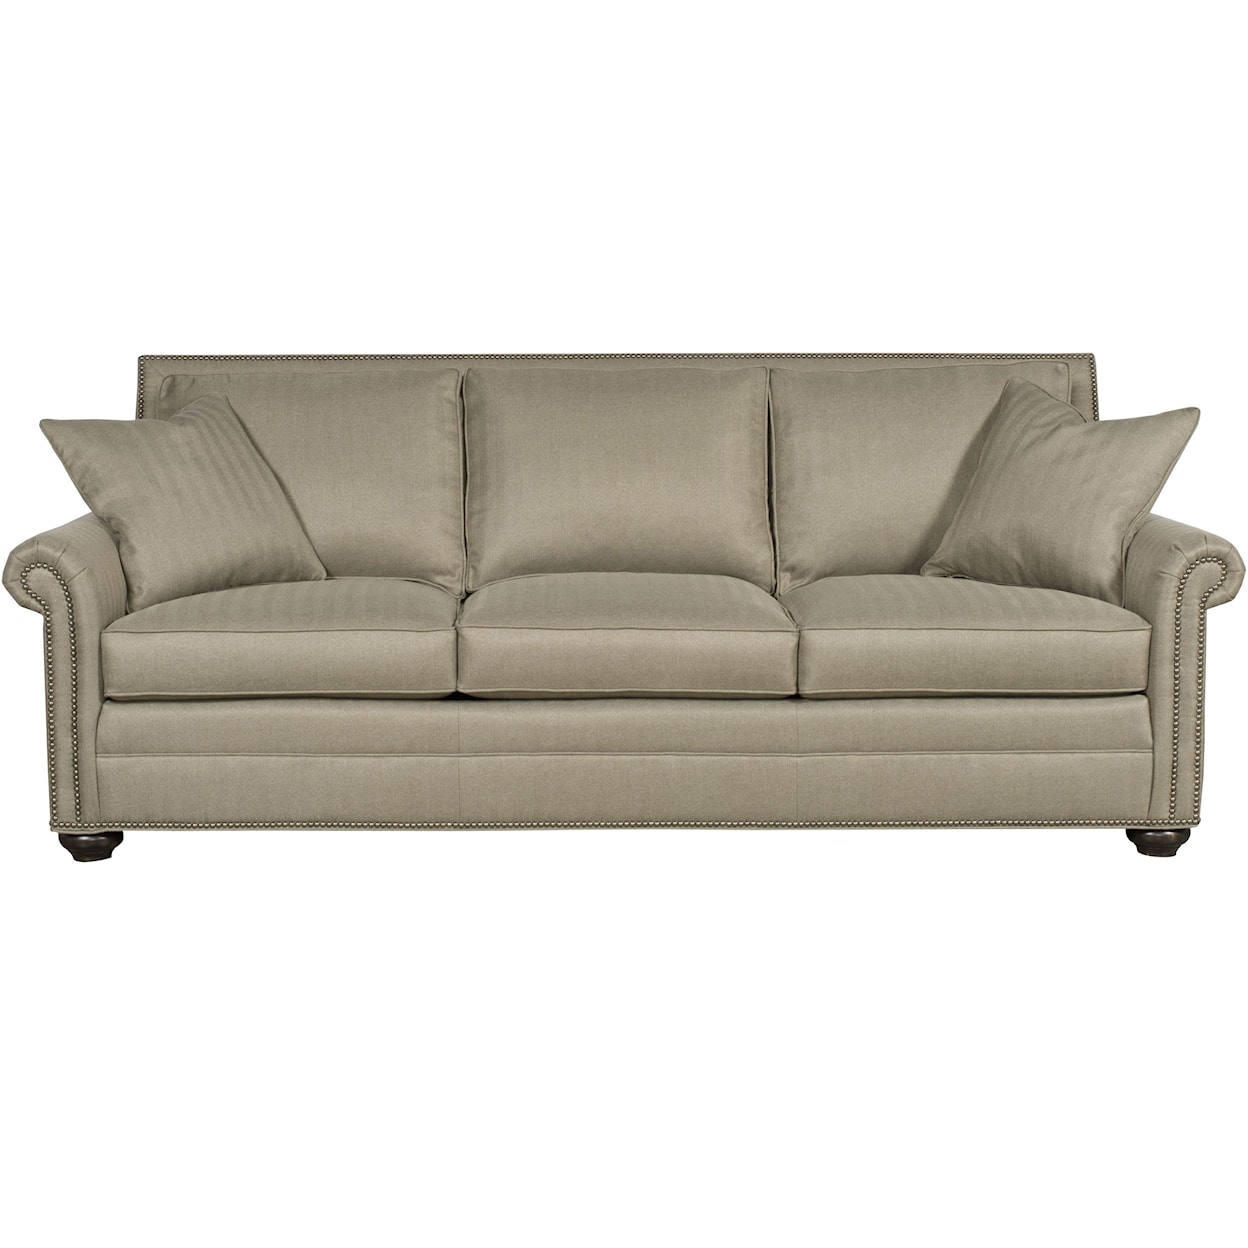 Vanguard Furniture Simpson Traditional Sofa